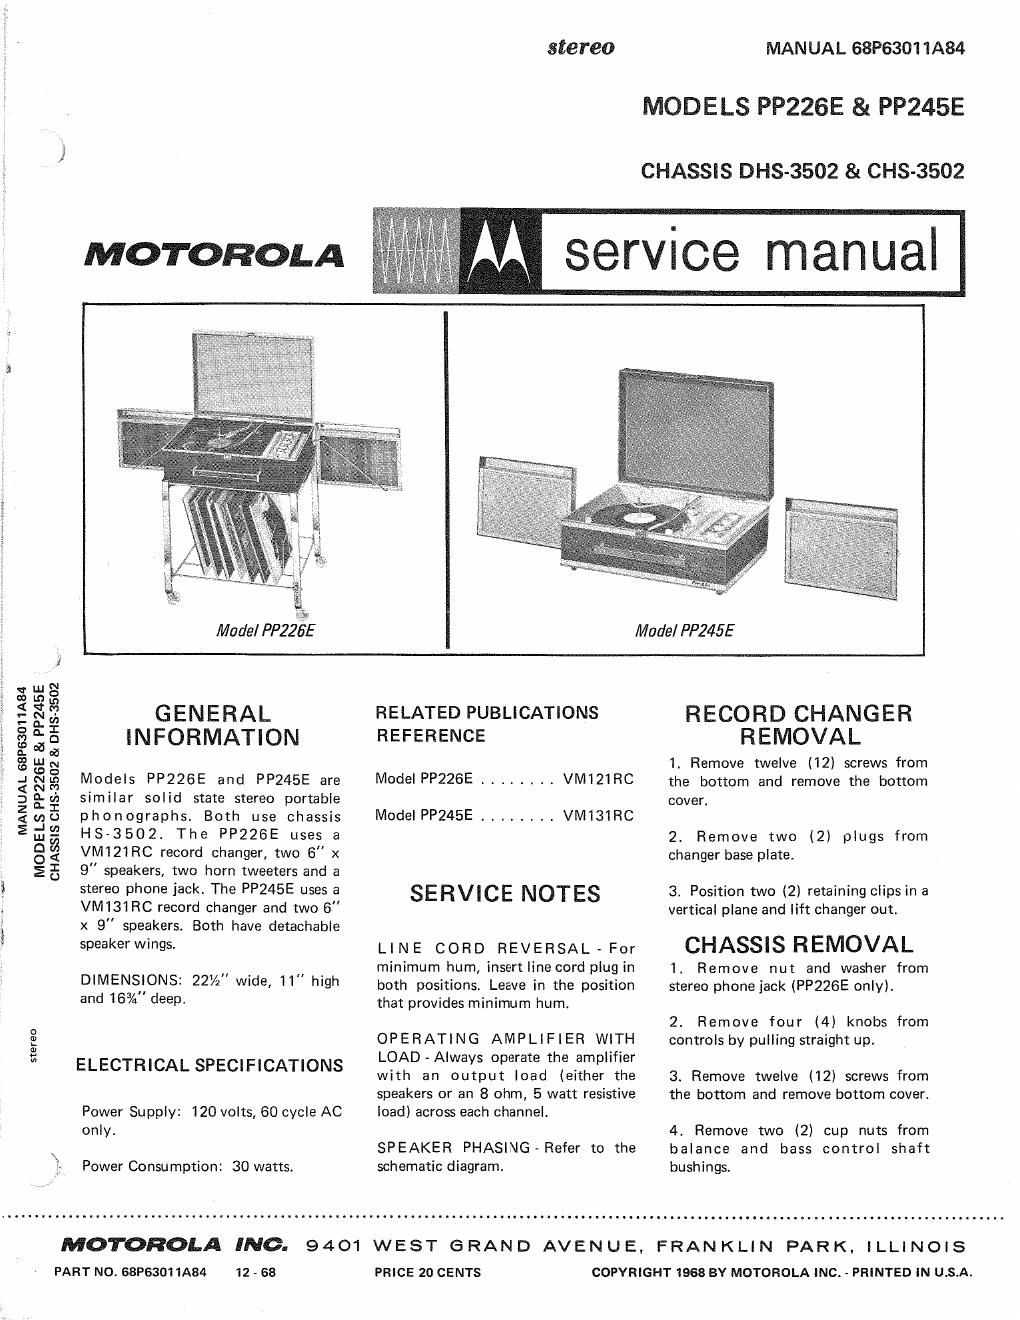 motorola pp 245 e service manual